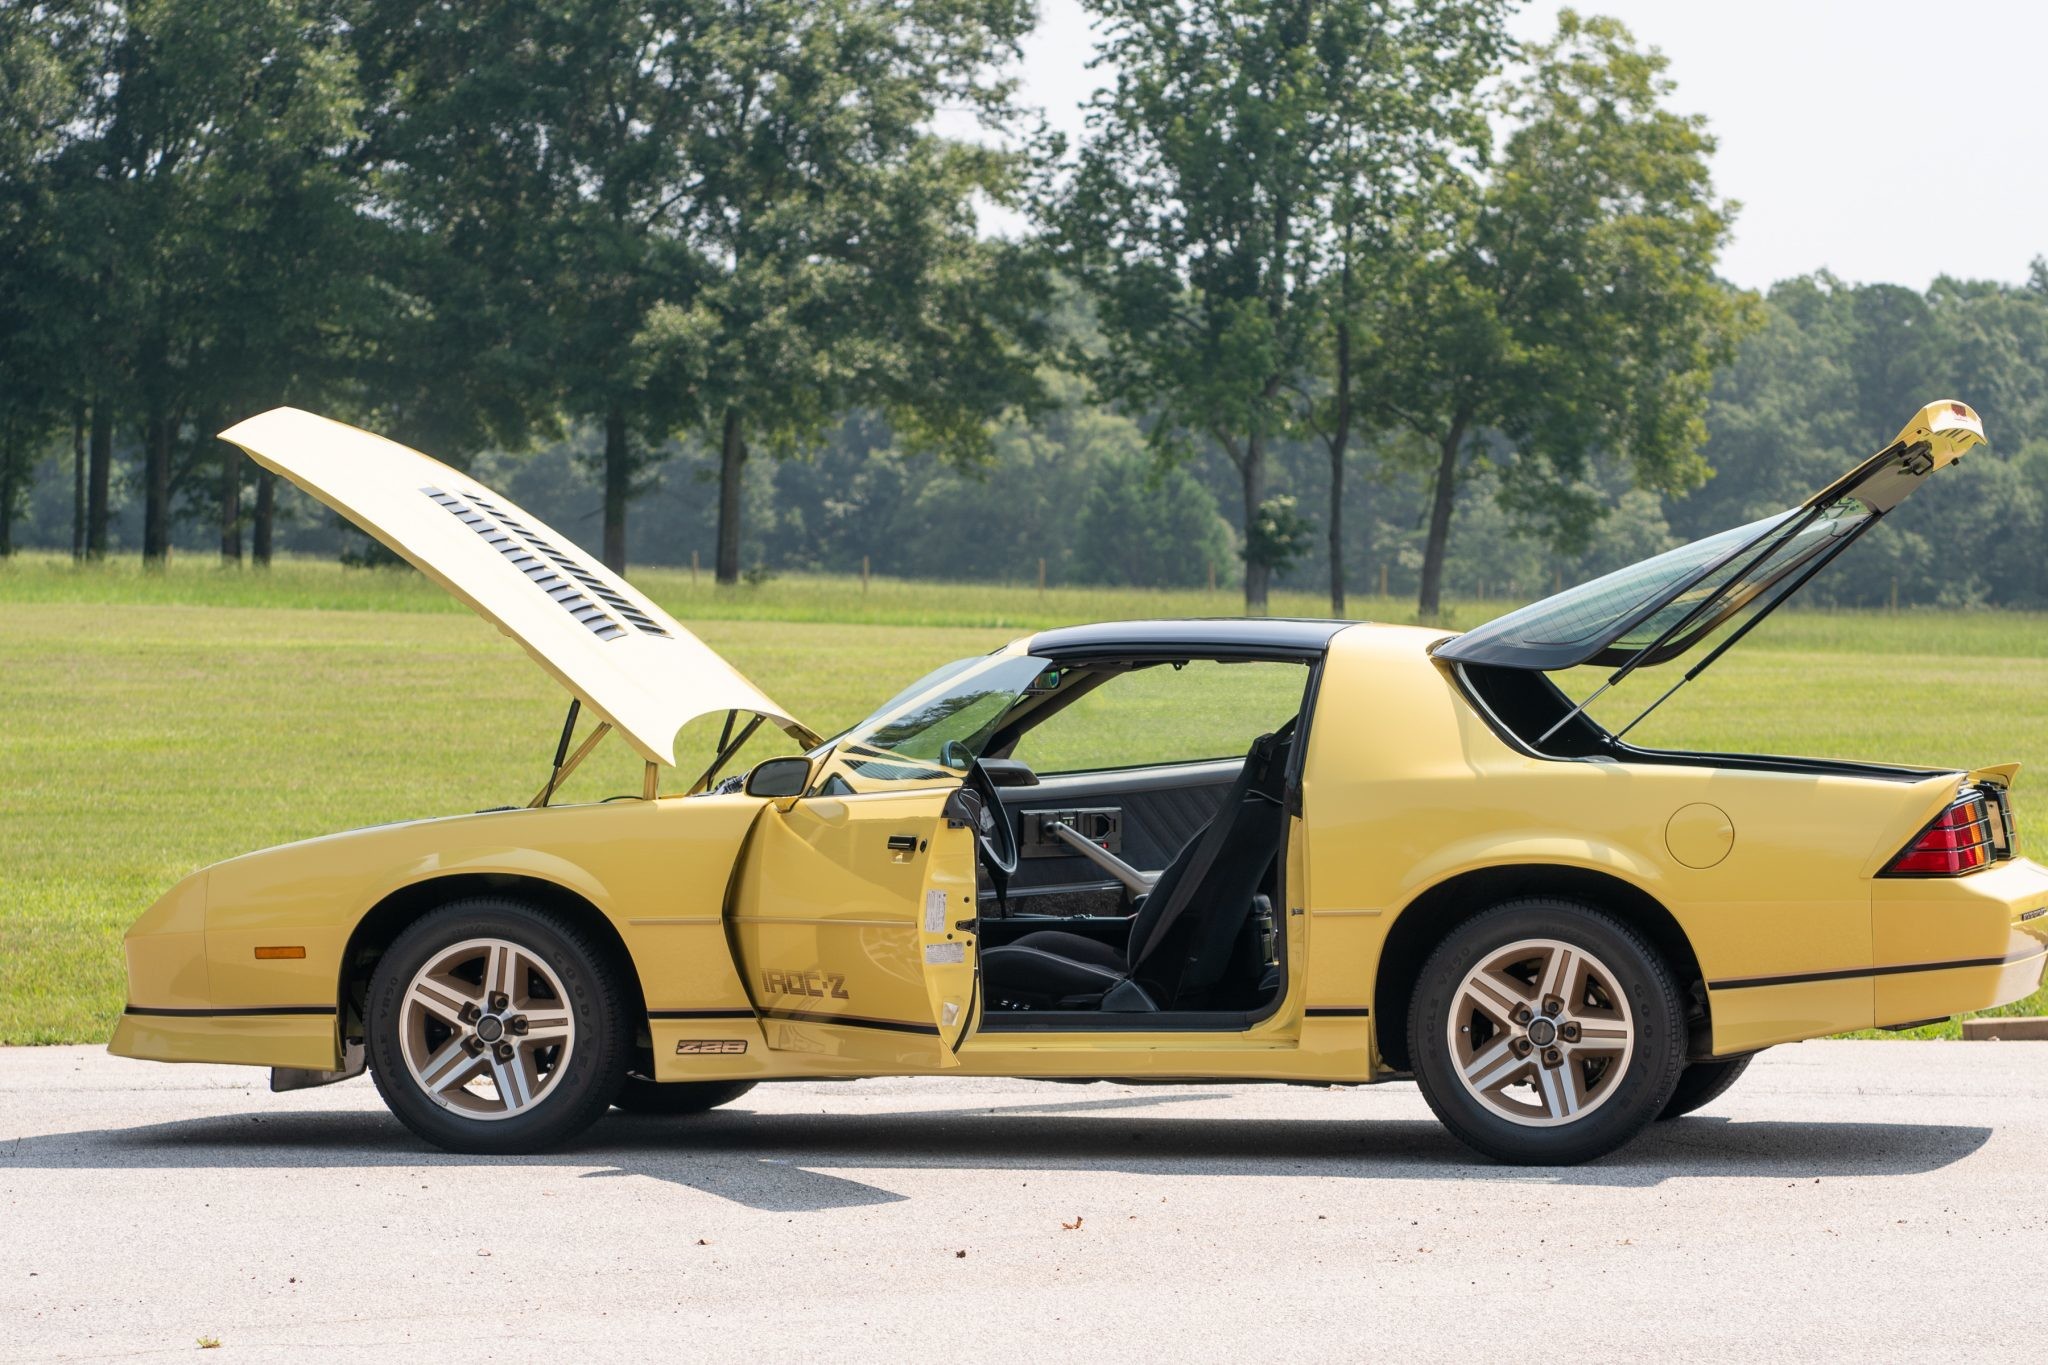 Chevrolet Camaro 1987 года выпуска за 56000 долларов